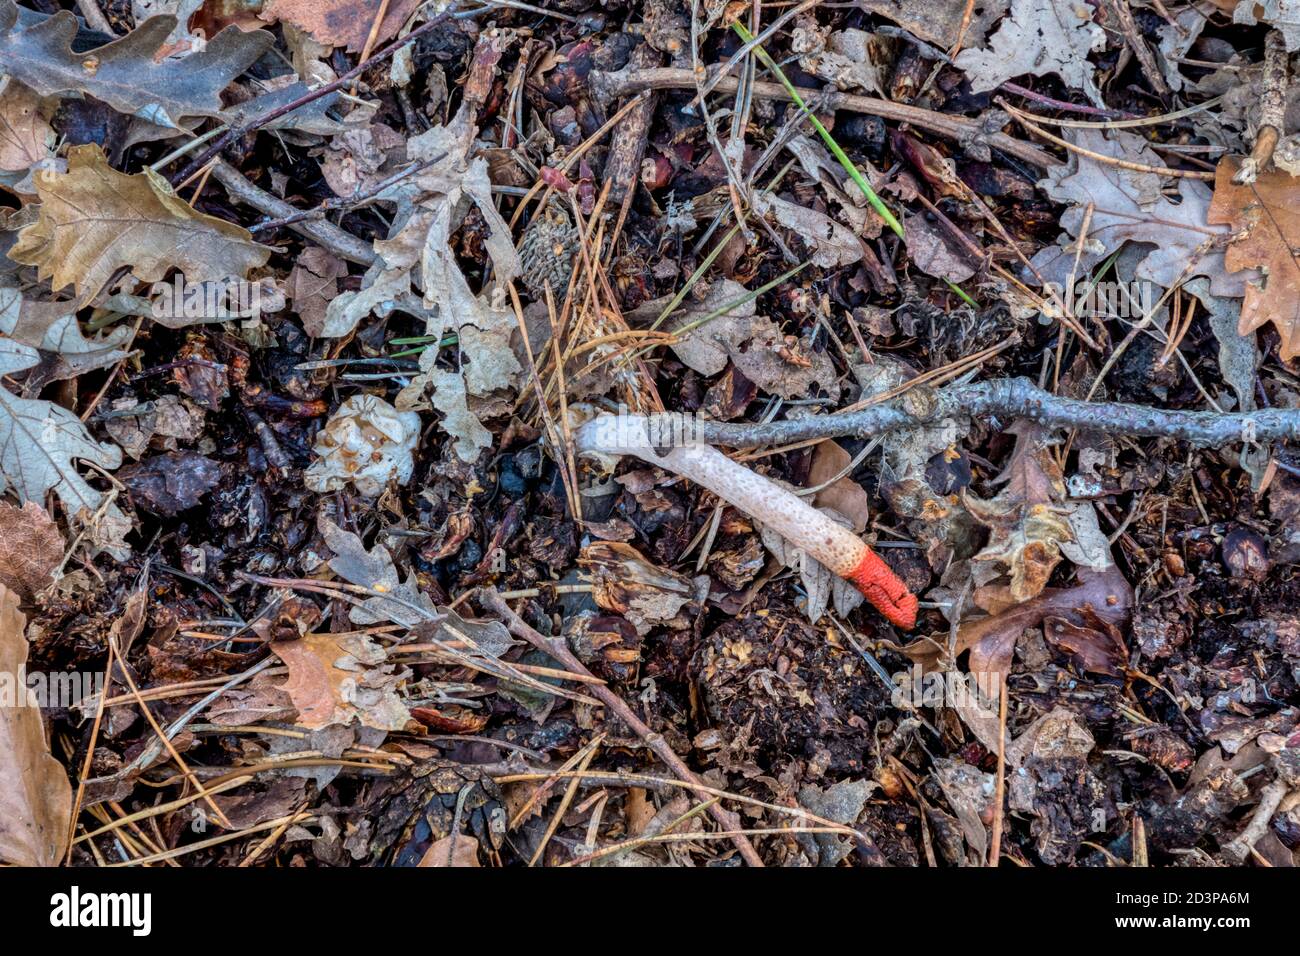 Dog stinkhorn fungus, Mutinus caninus, growing in leaf litter on woodland floor. Stock Photo